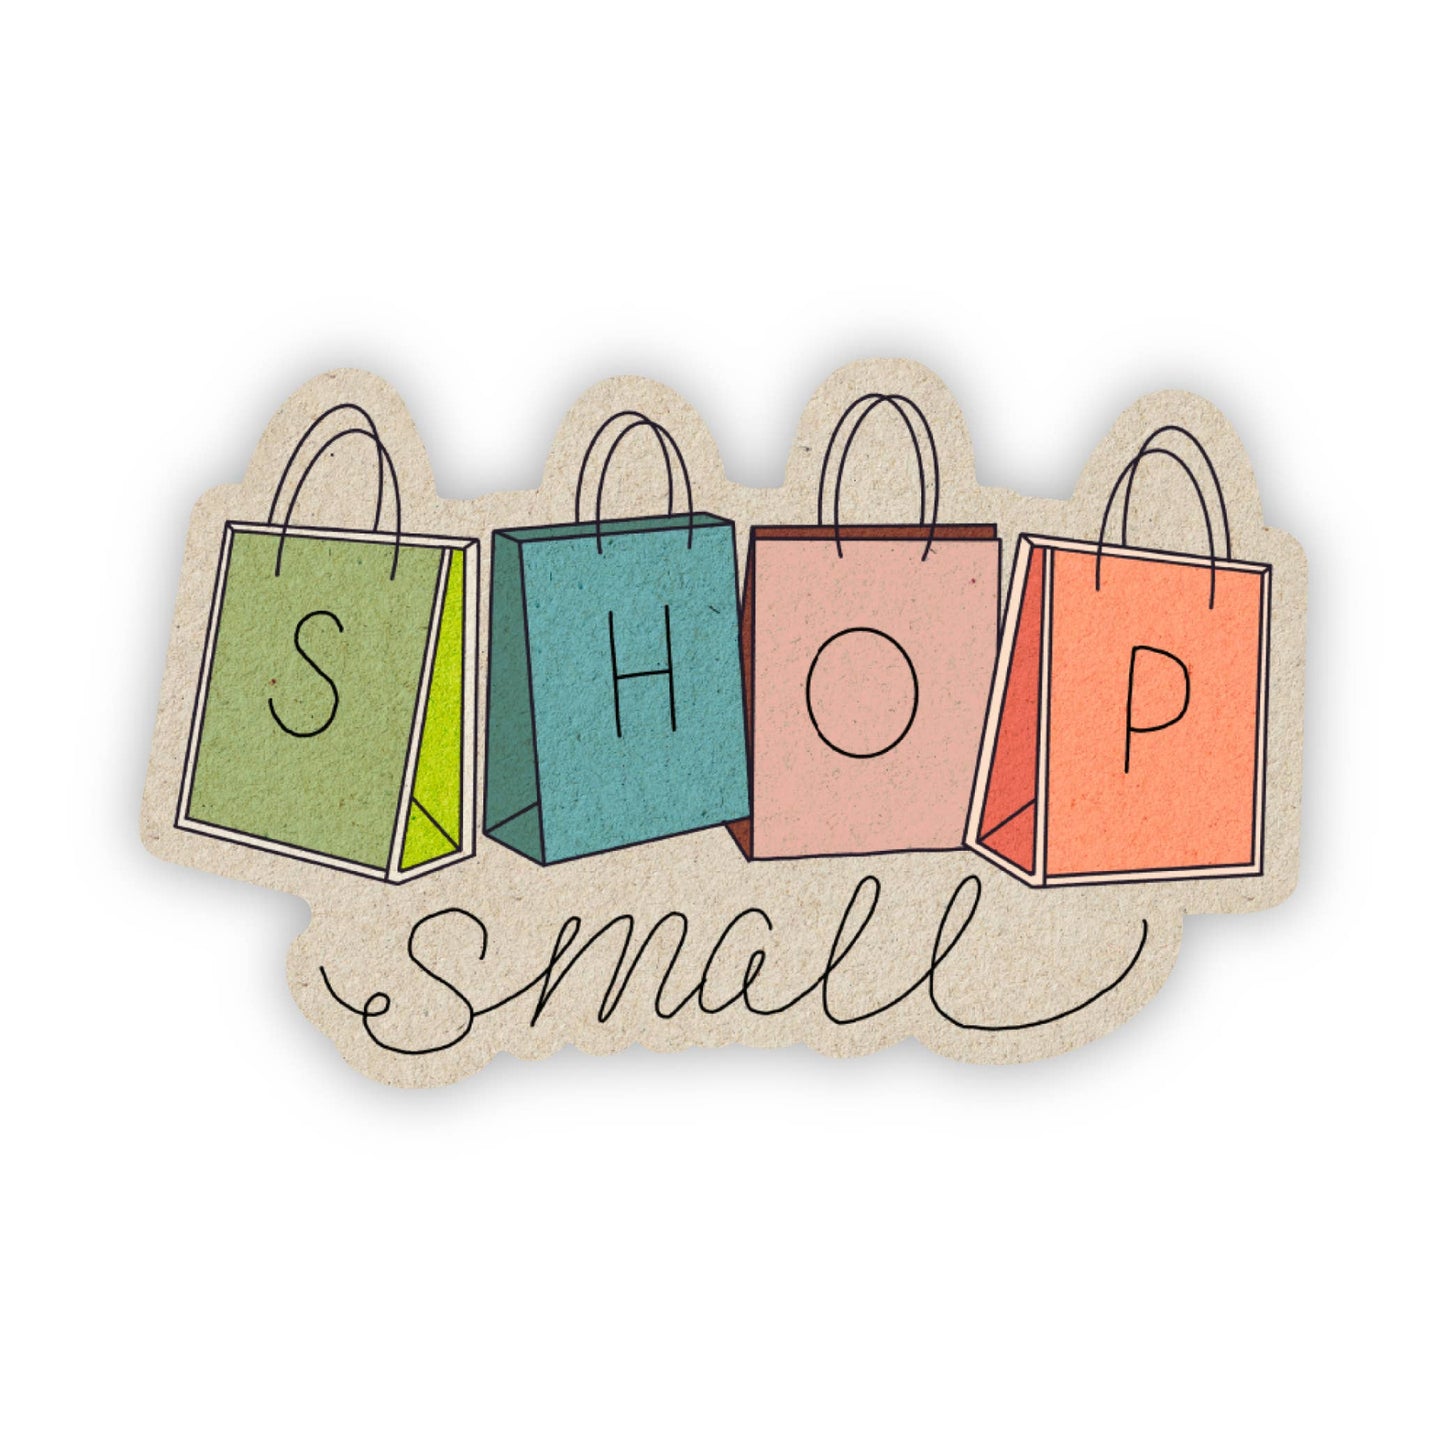 "Shop Small" Shopping Bag Sticker